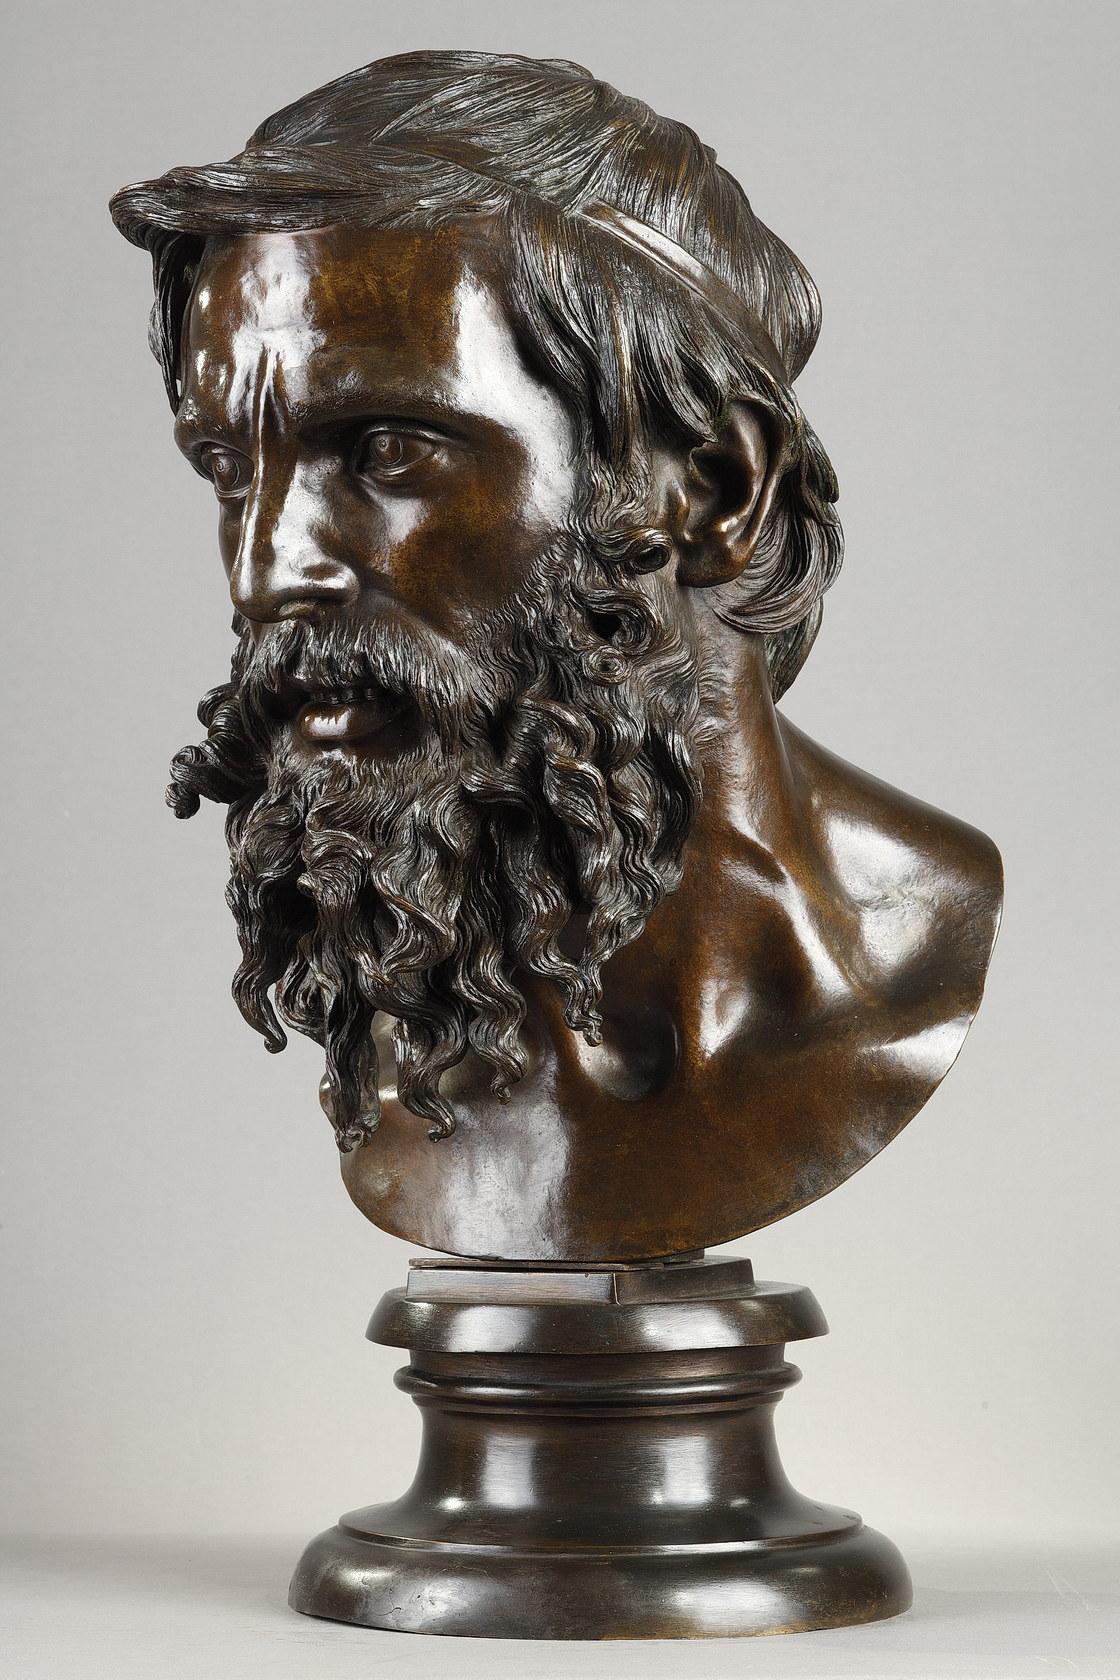 The Philosopher - Or Figurative Sculpture par Vincenzo Gemito